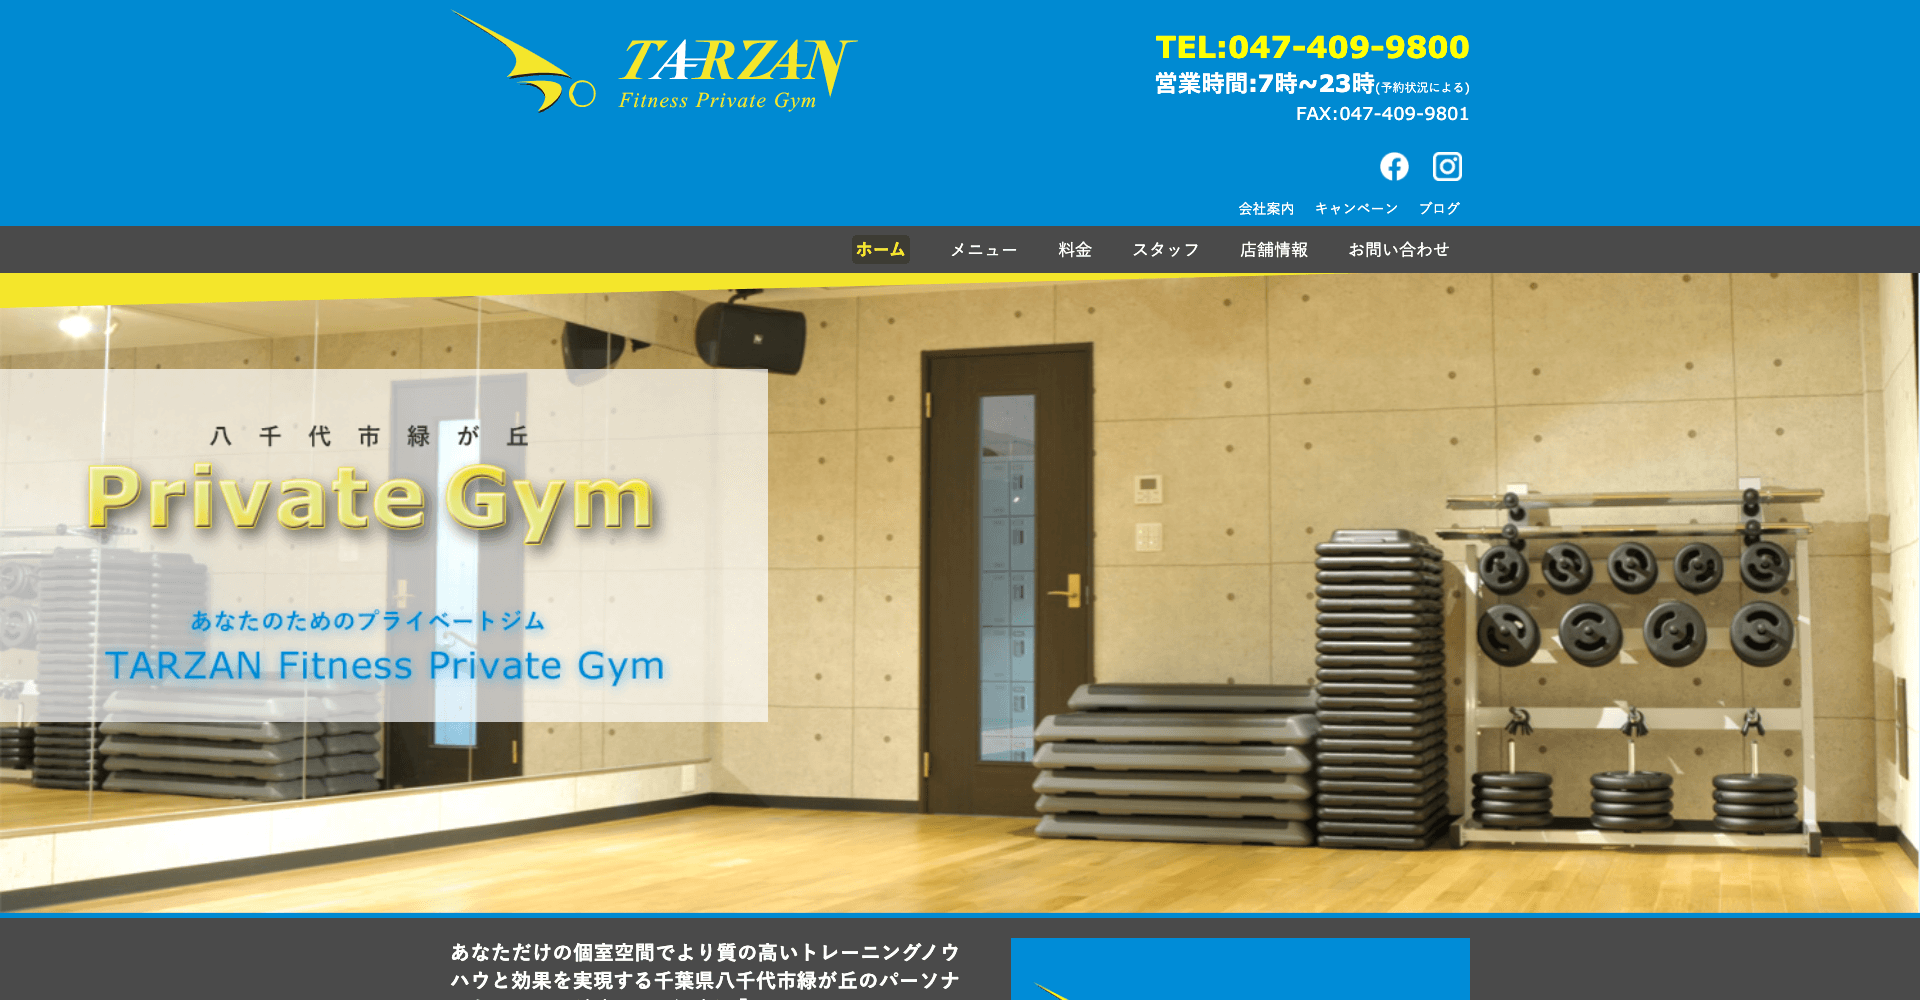 TARZAN Fitness